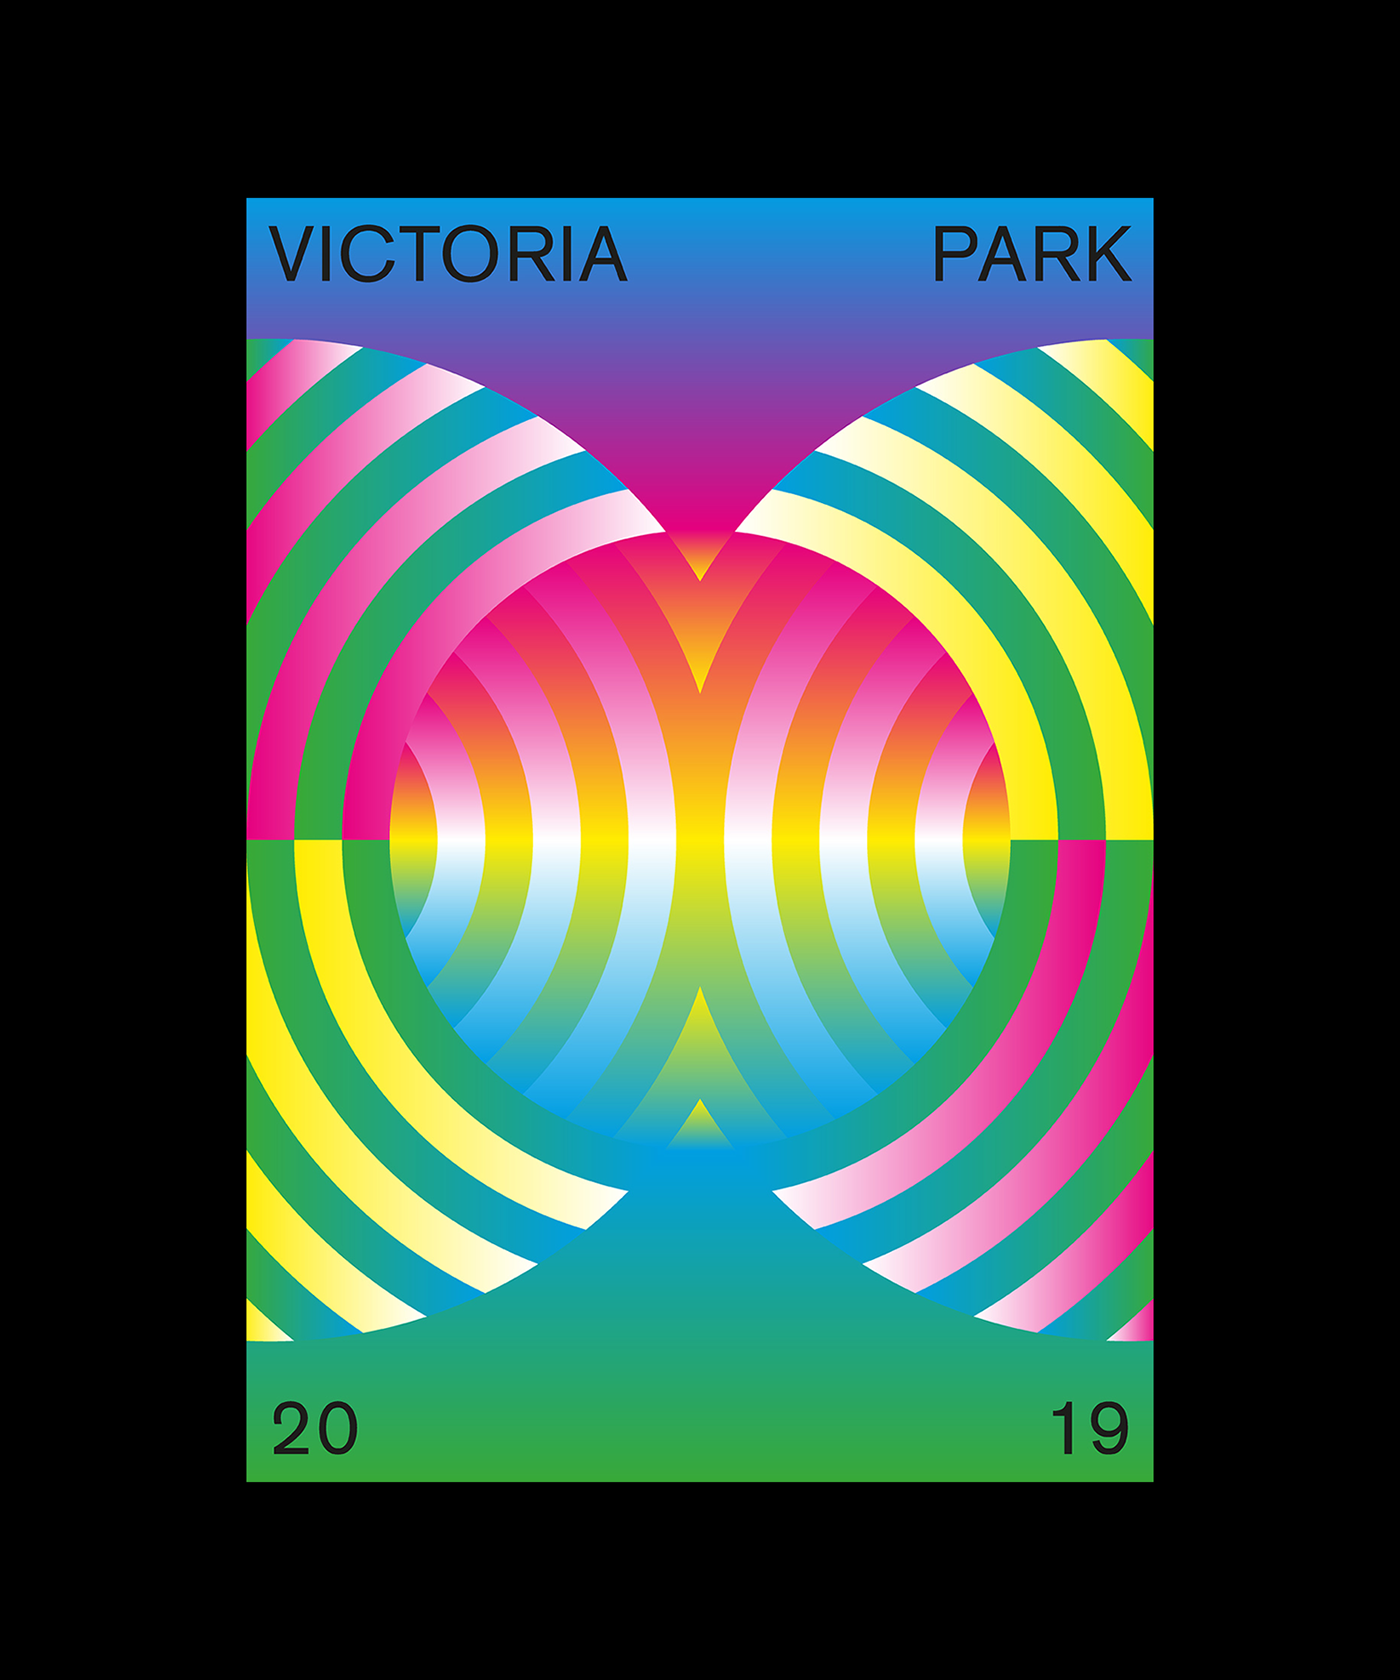 Akzidenz Grotesk All Points East color gradient contest festival graphic design  London poster sunset victoria park